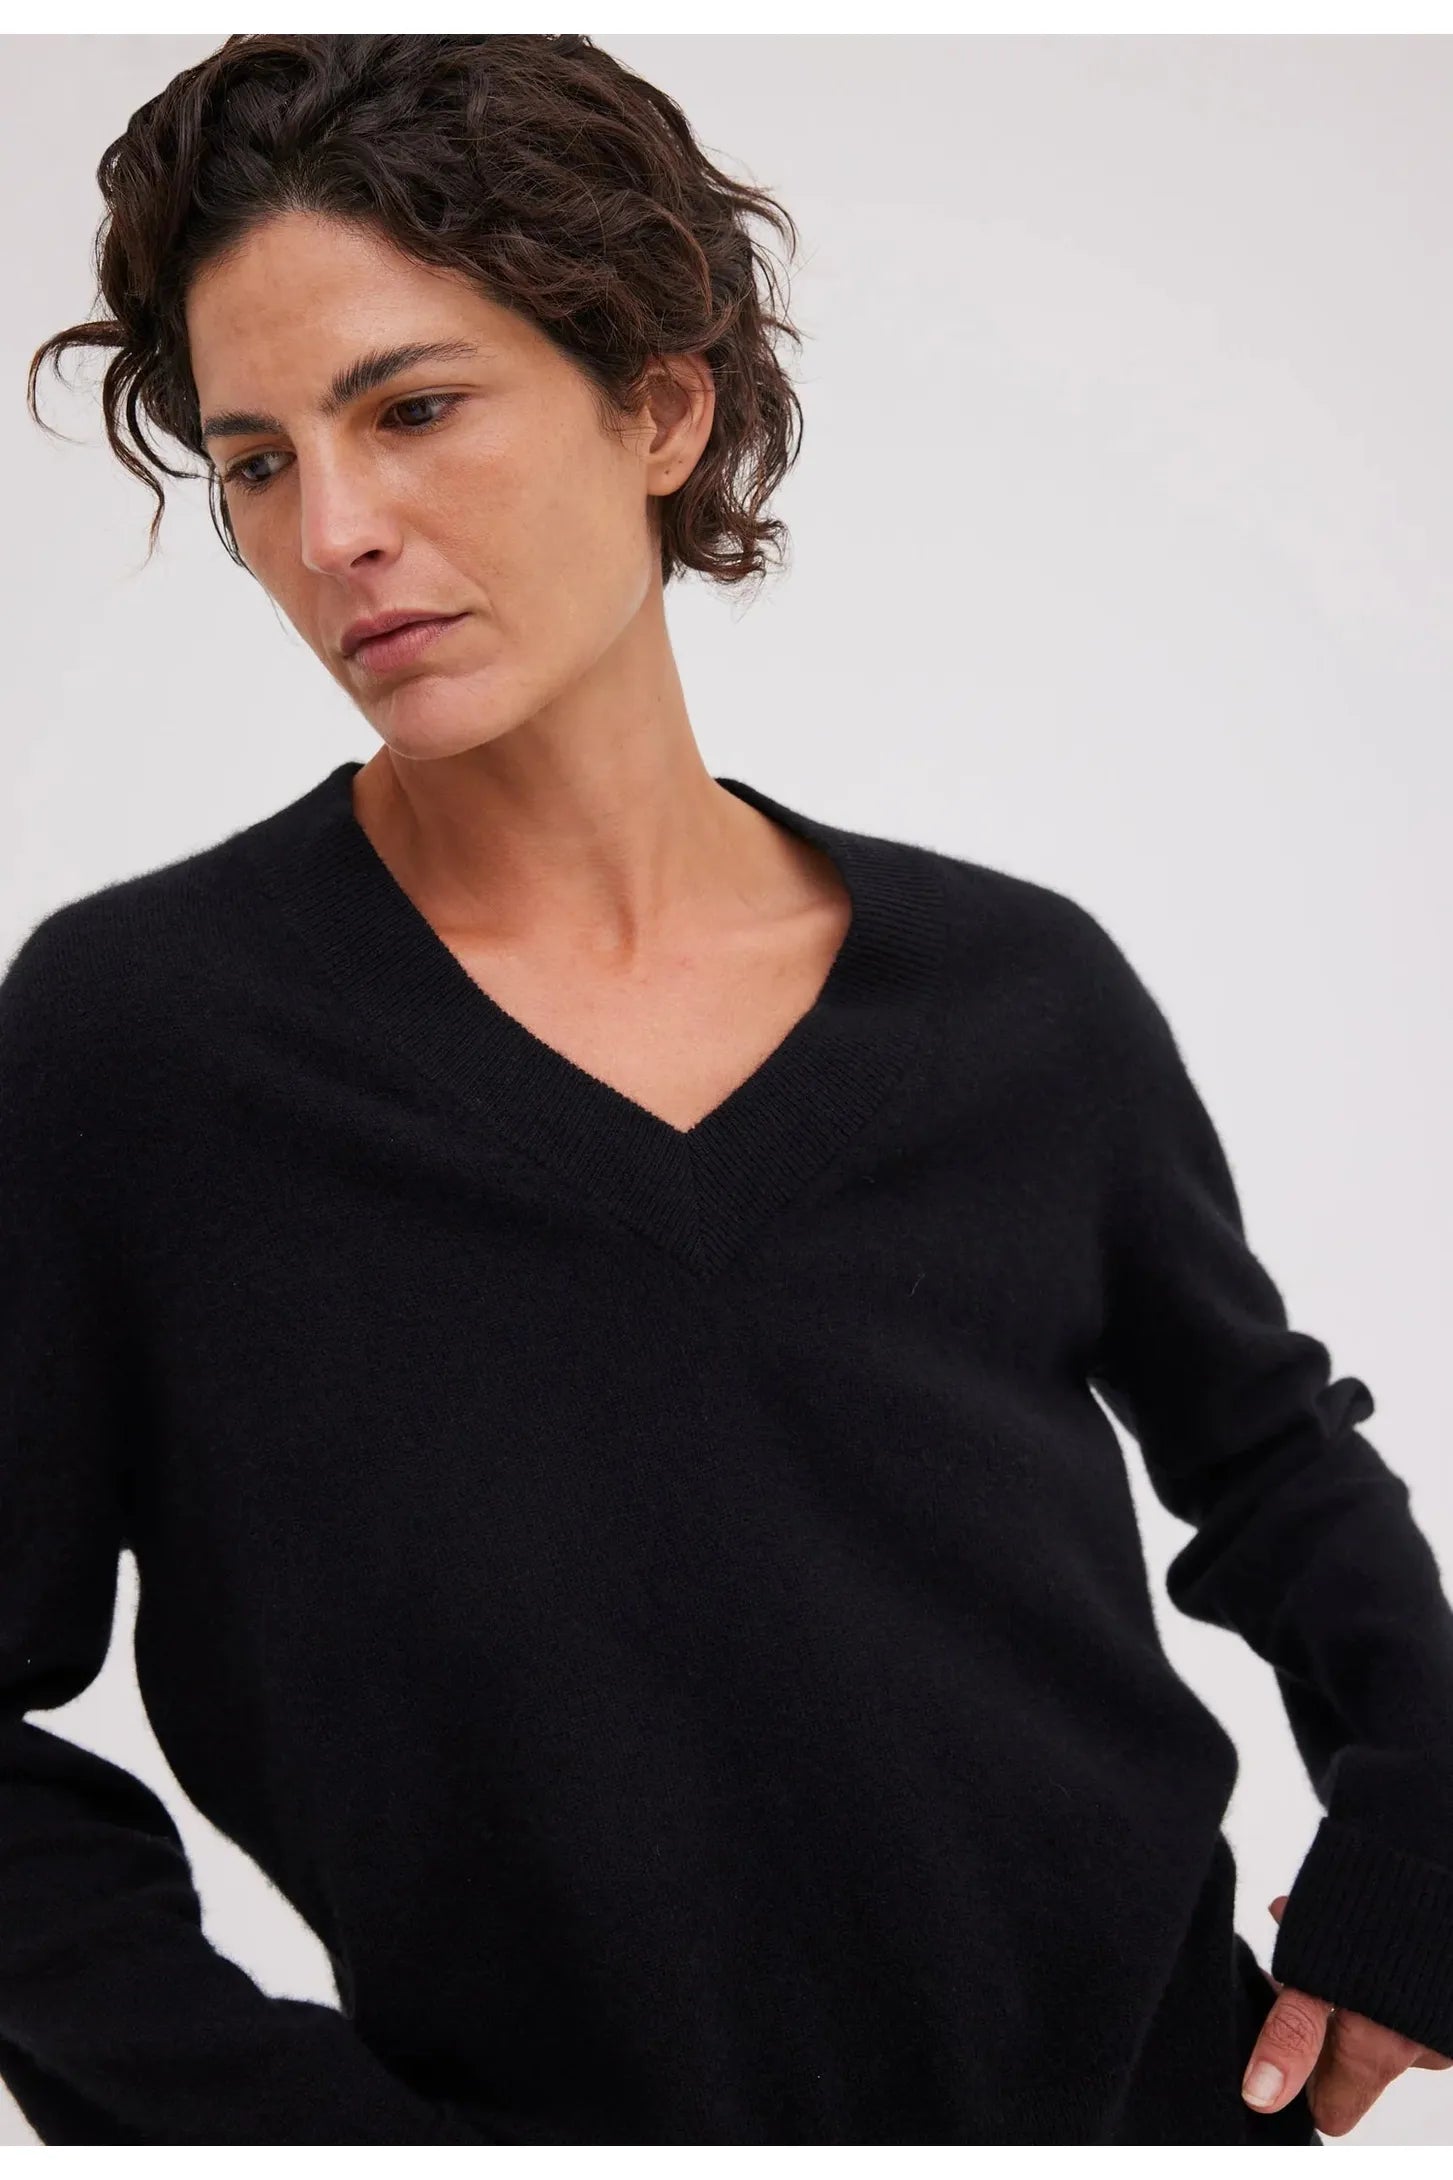 Sharpo Sweater in Black by Jac + Jack